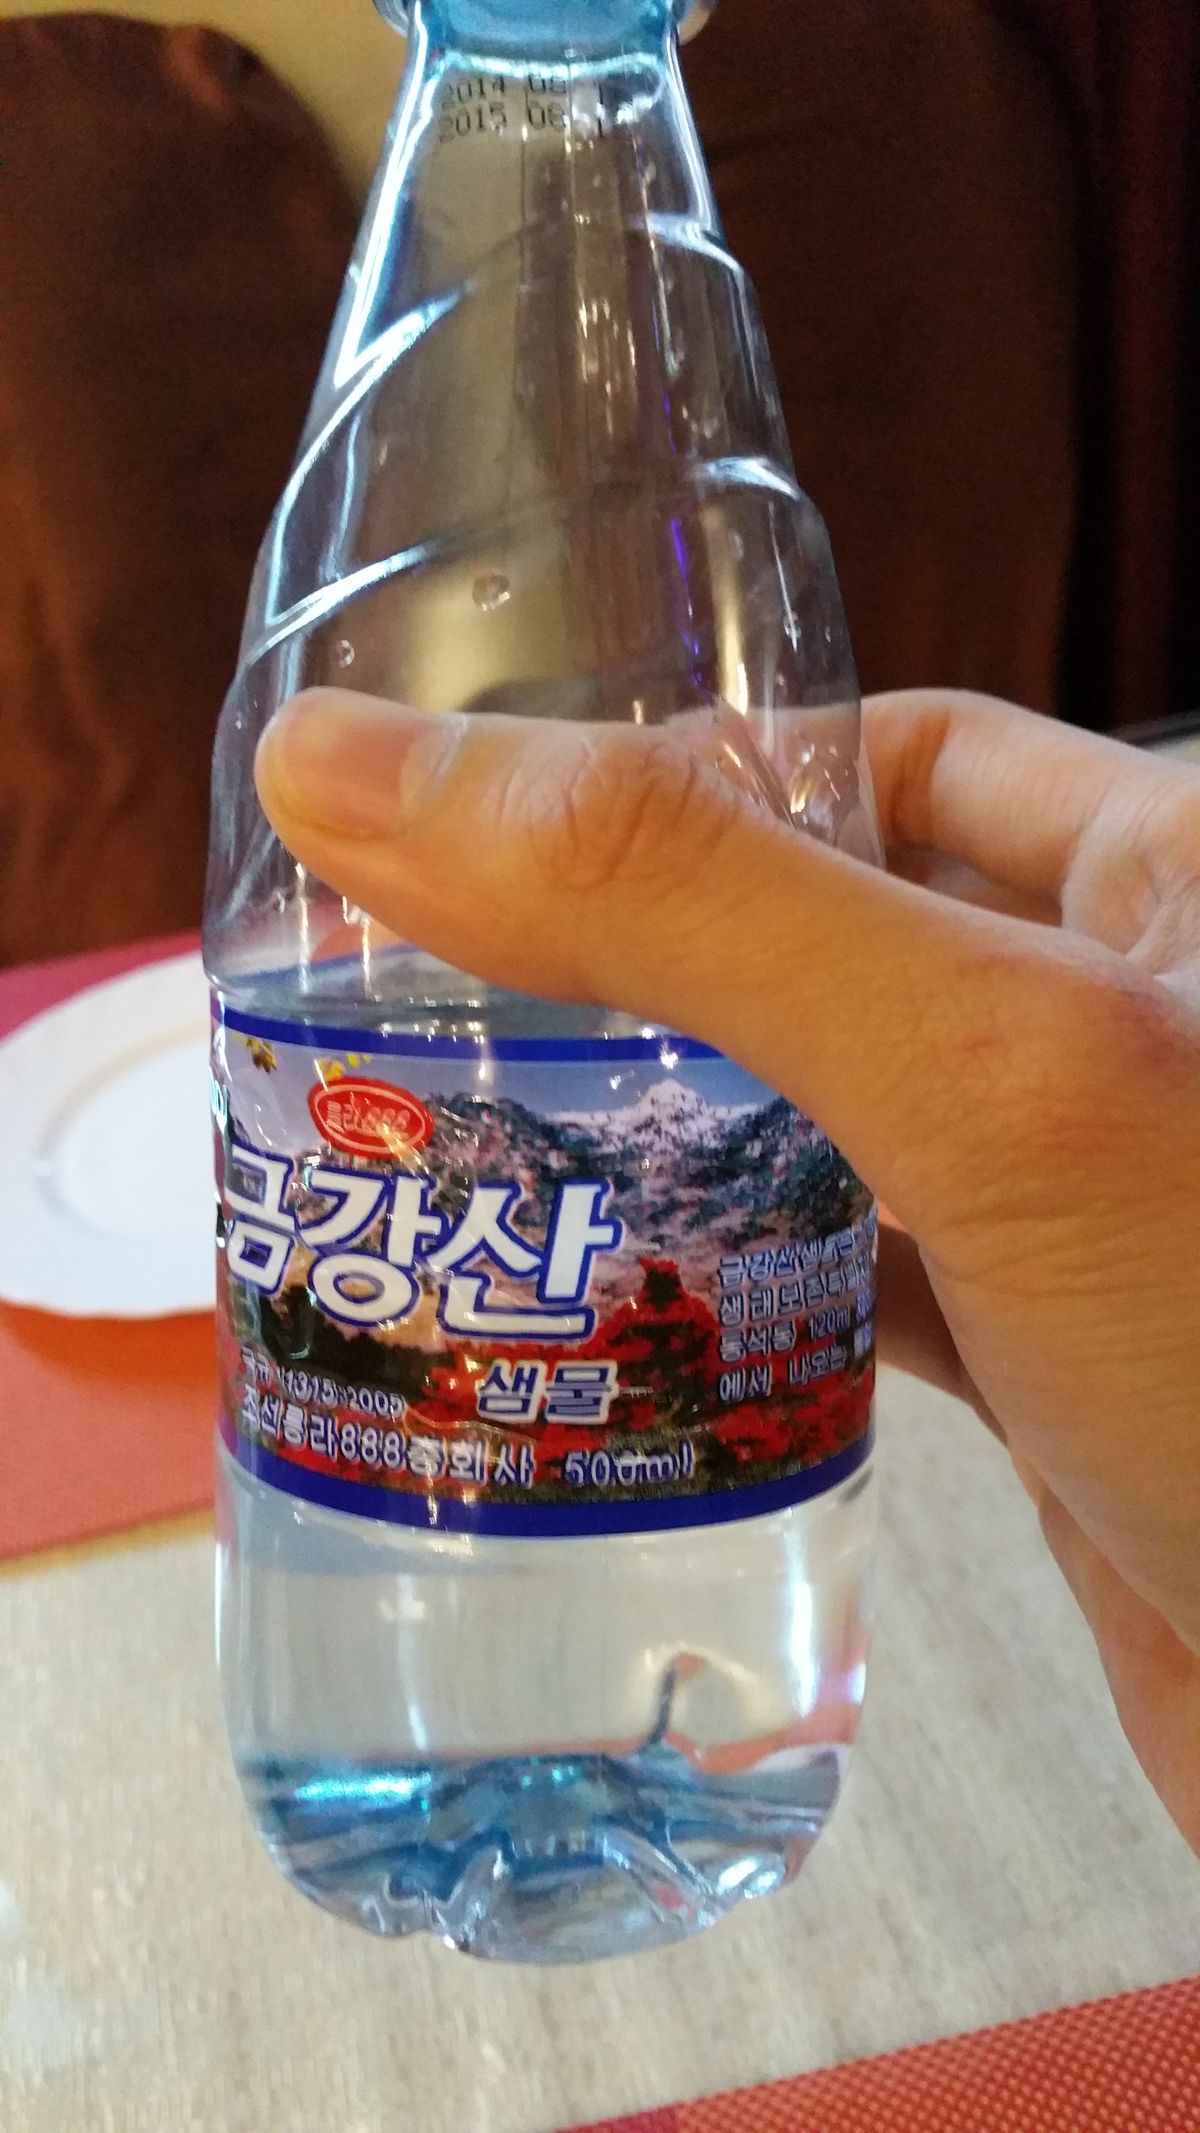 20160207_143810.jpg : 북한식당 유통기한 지난 물 파네요.ㅡㅡ